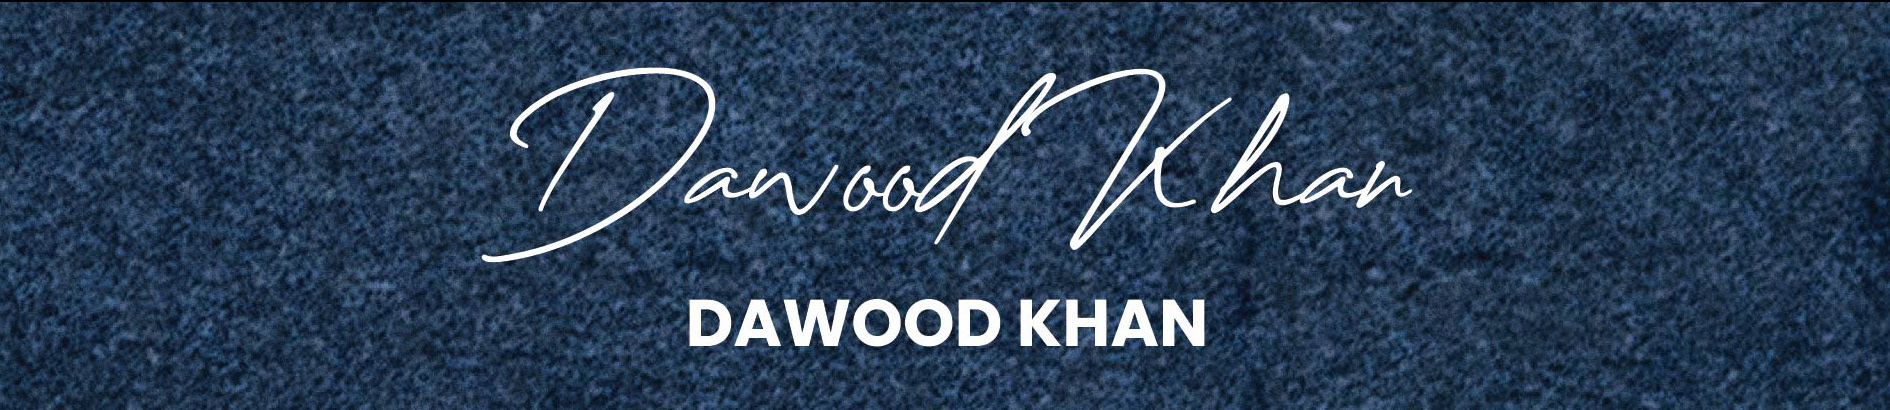 Banner profilu uživatele Muhammad Dawood Khan